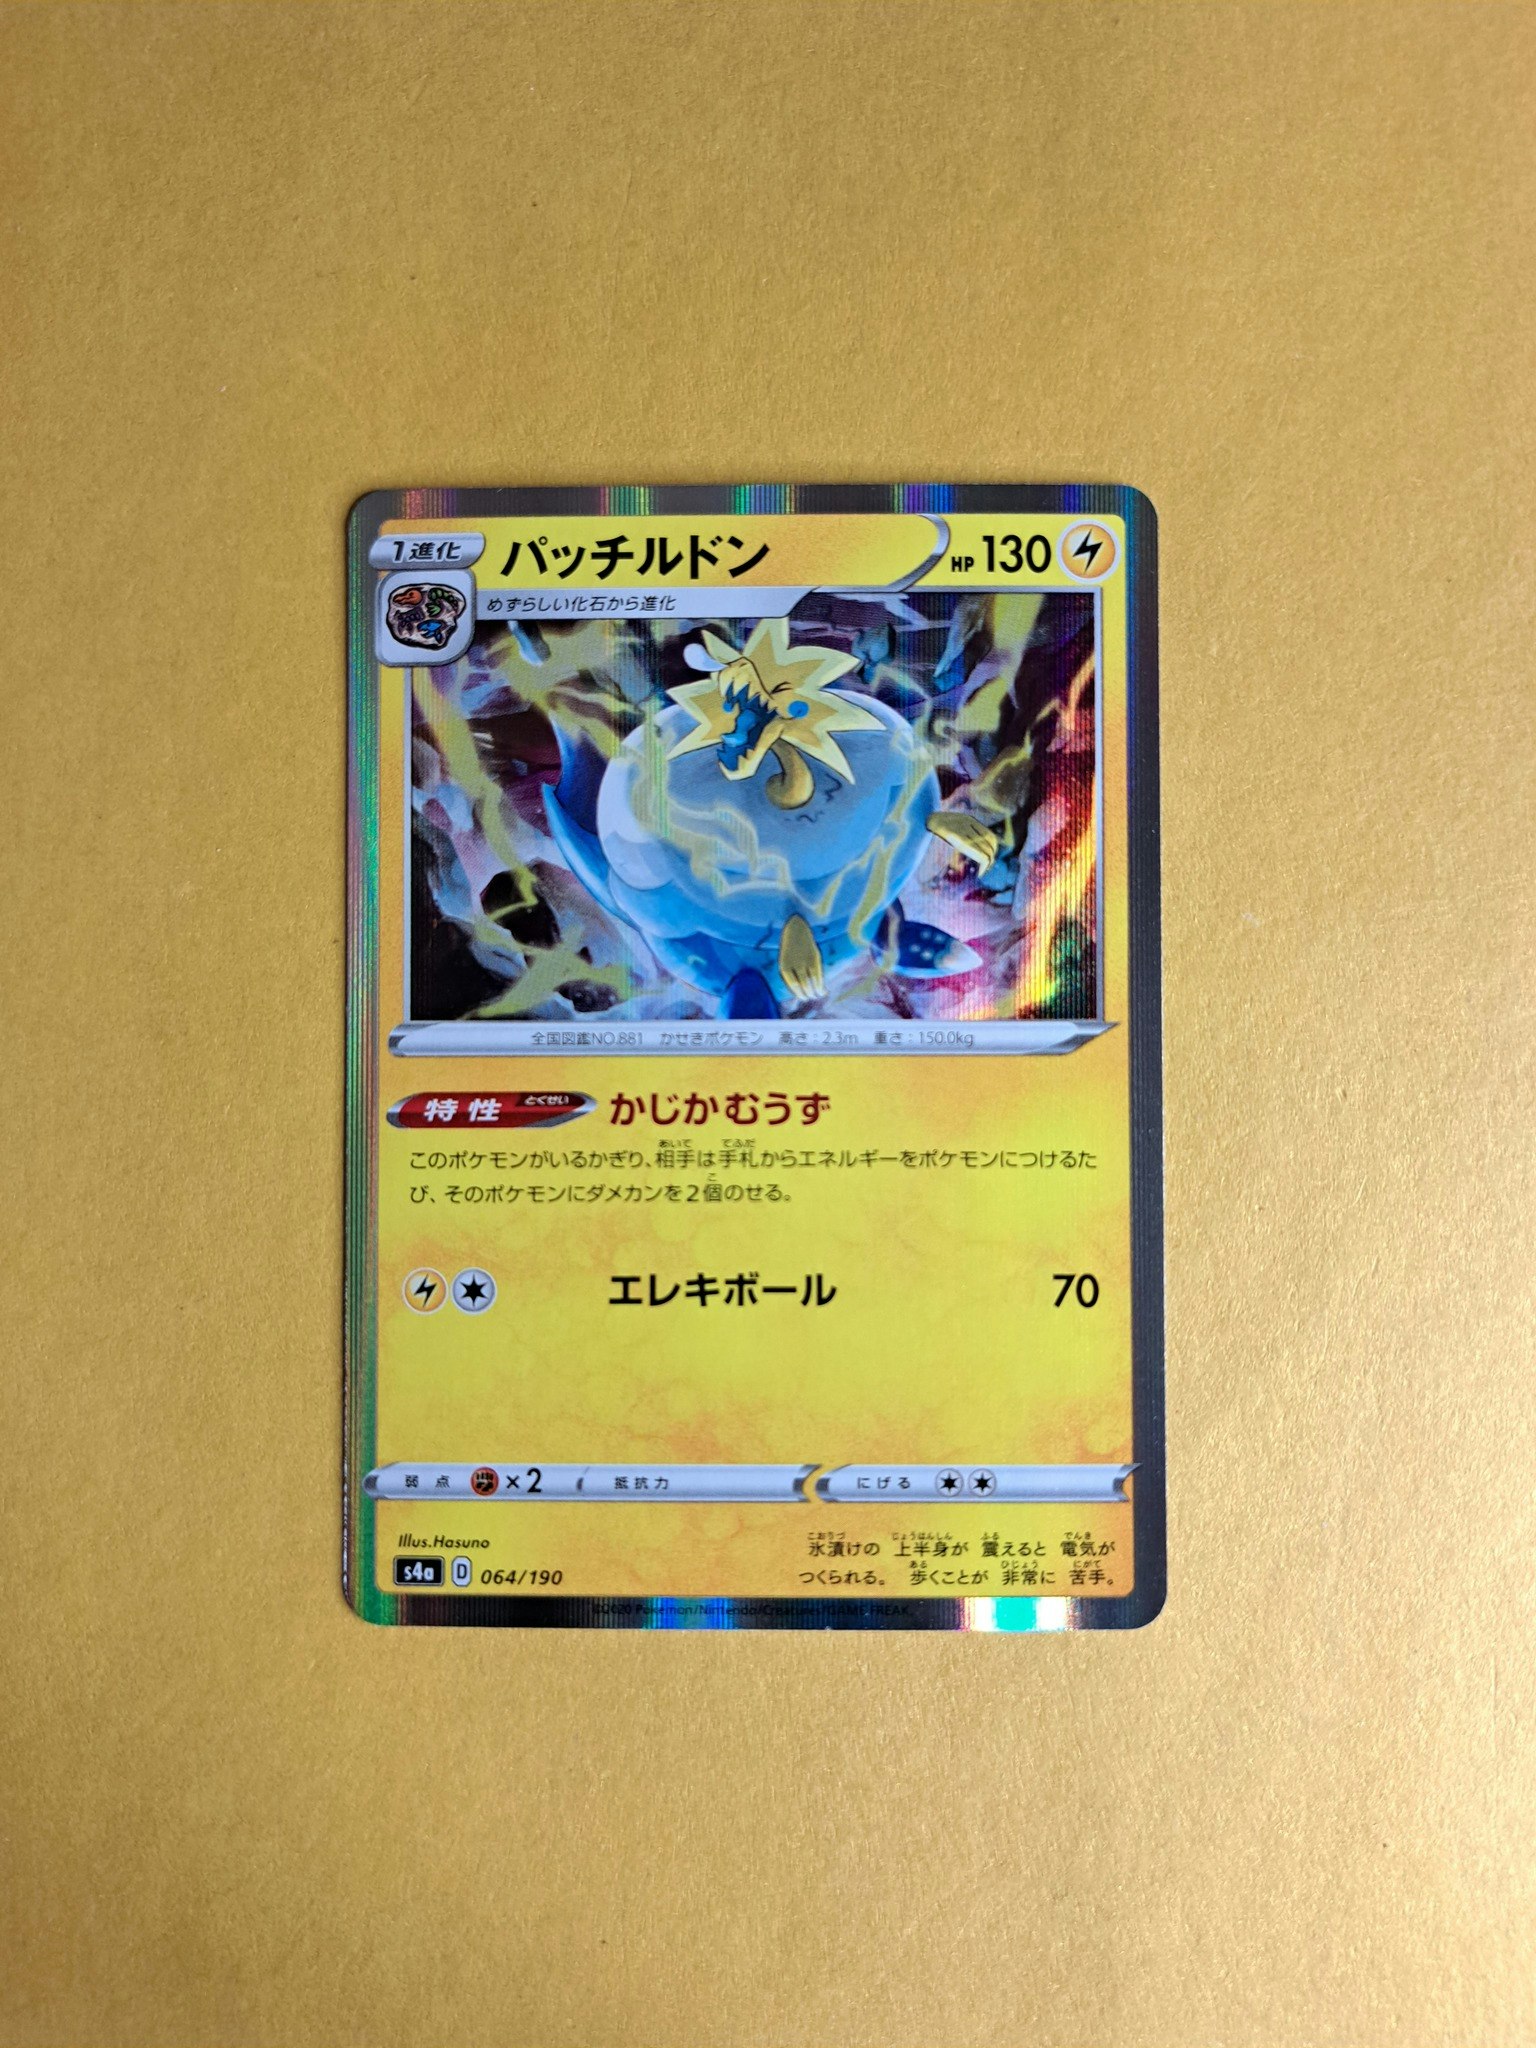 Arctozolt Holo 064/190 Shiny Star V s4a Pokemon